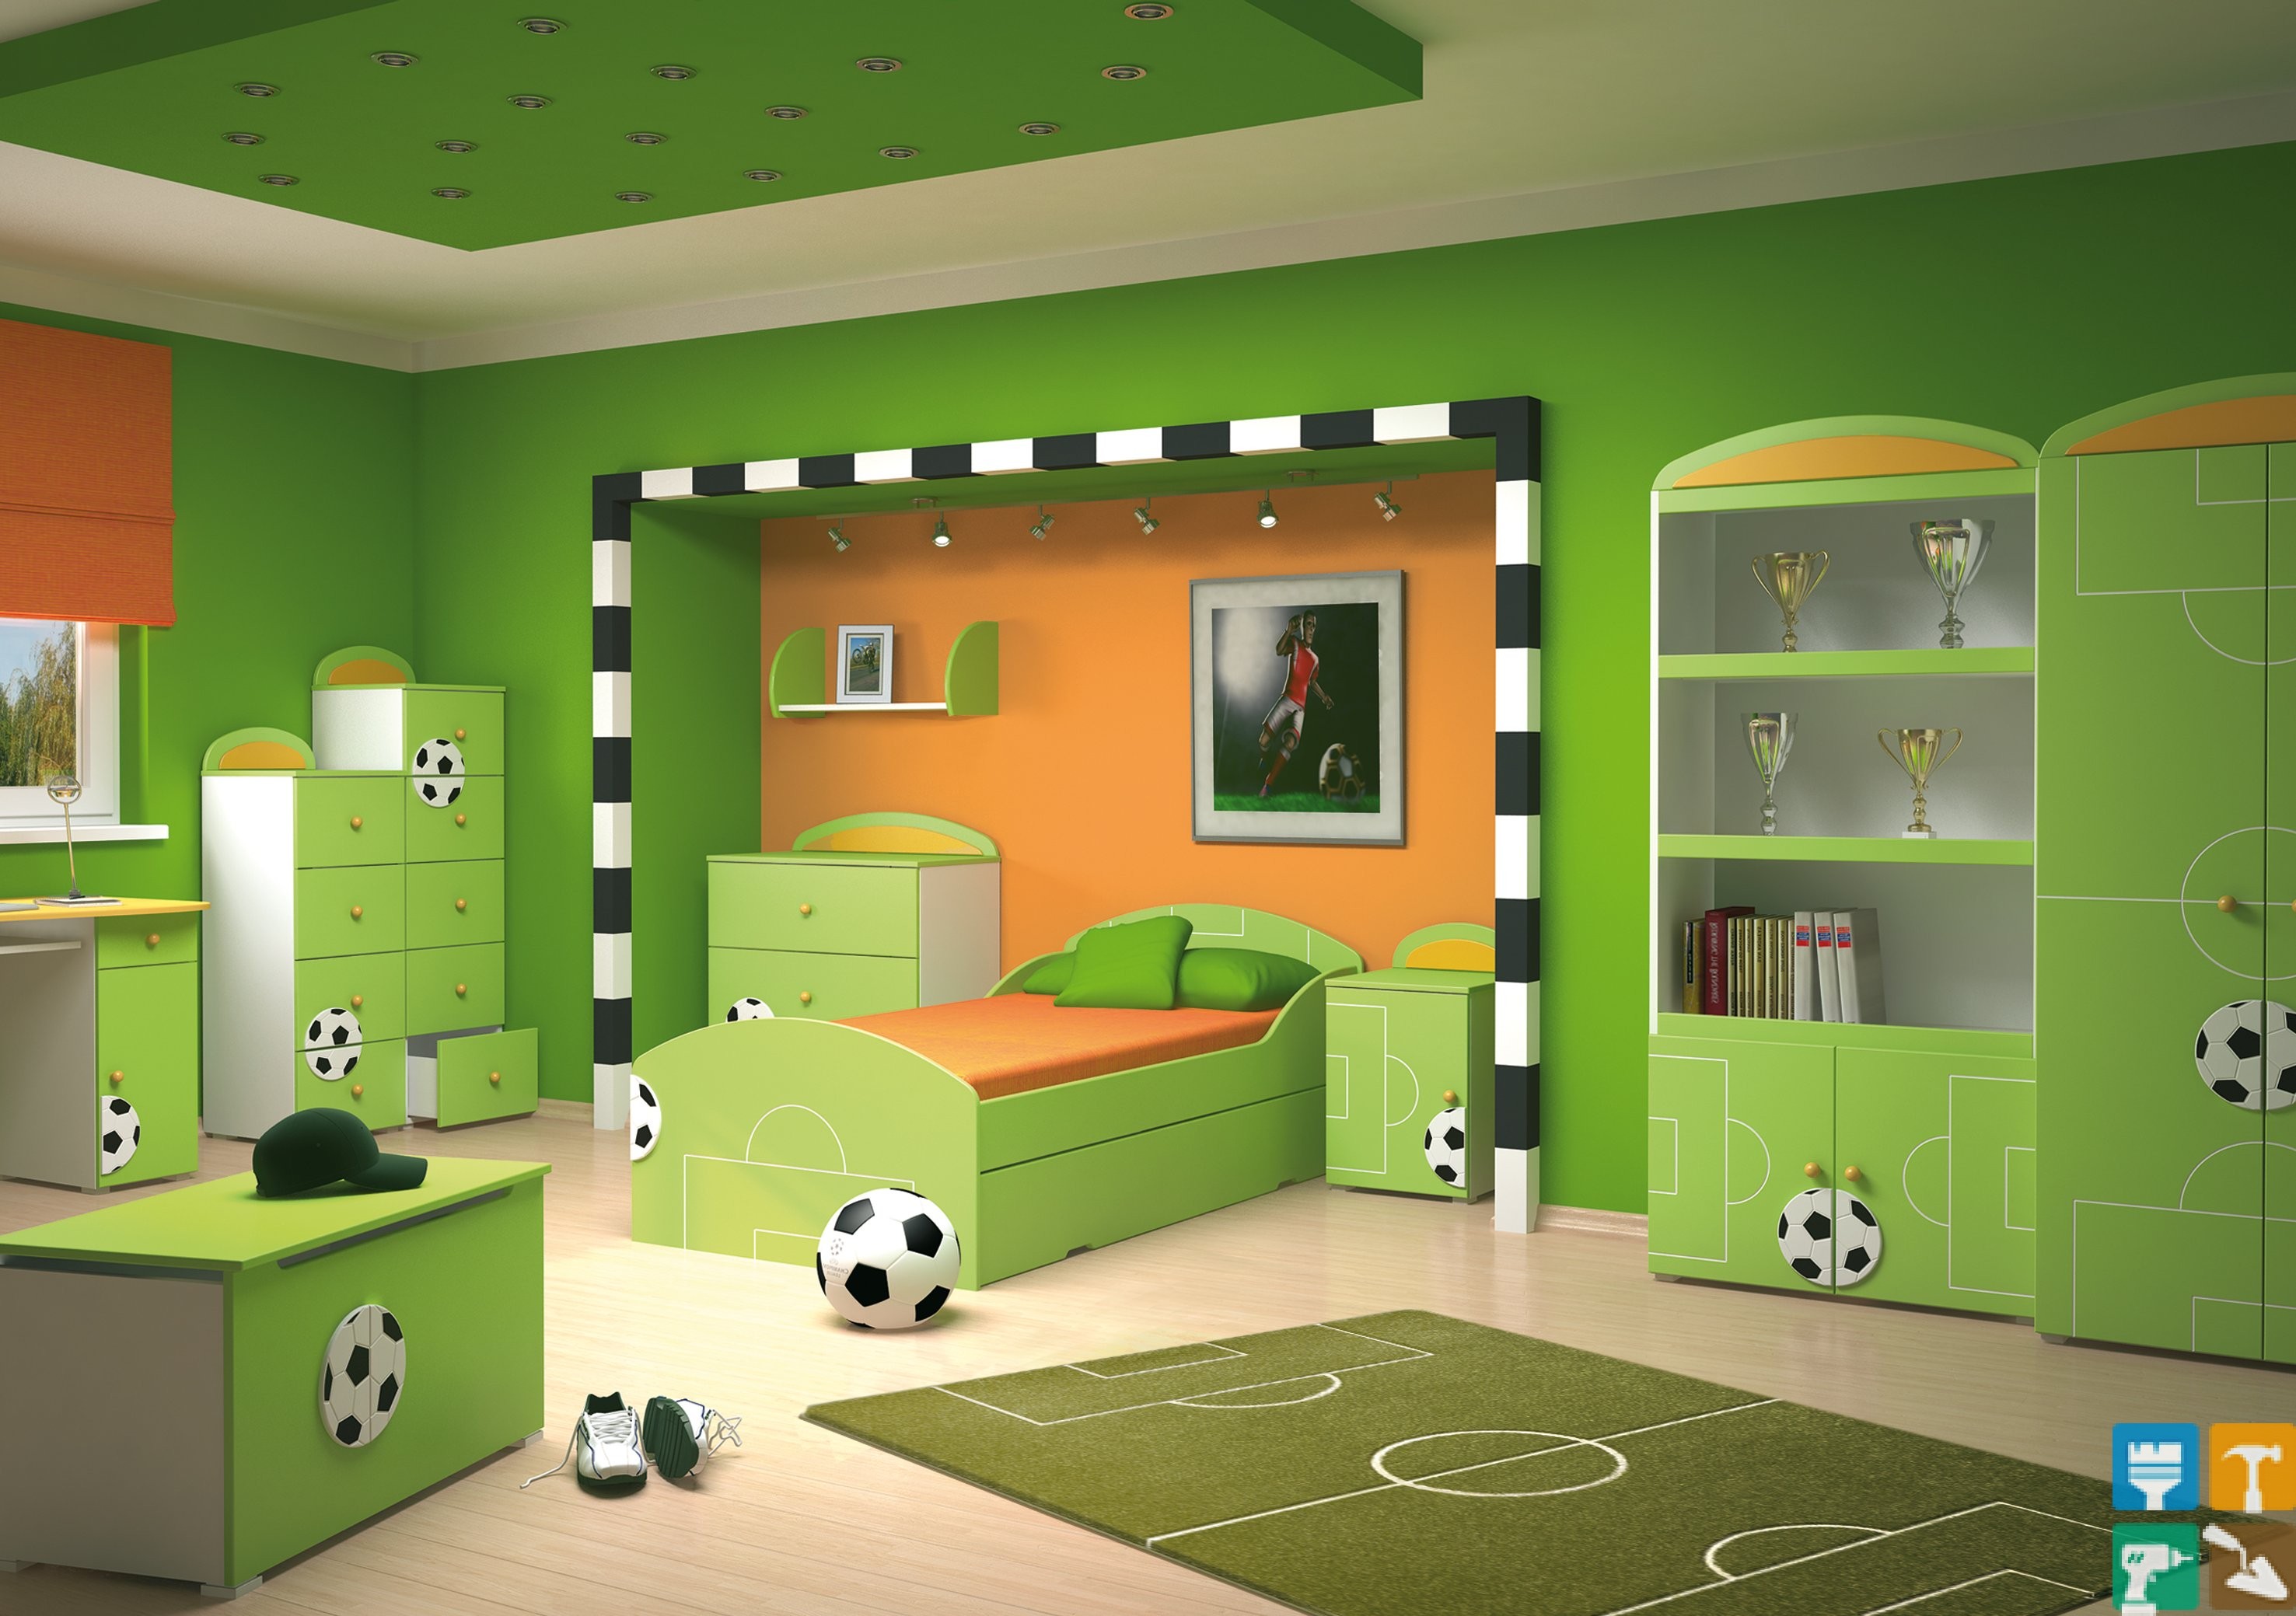 Children's room for a boy soccer player